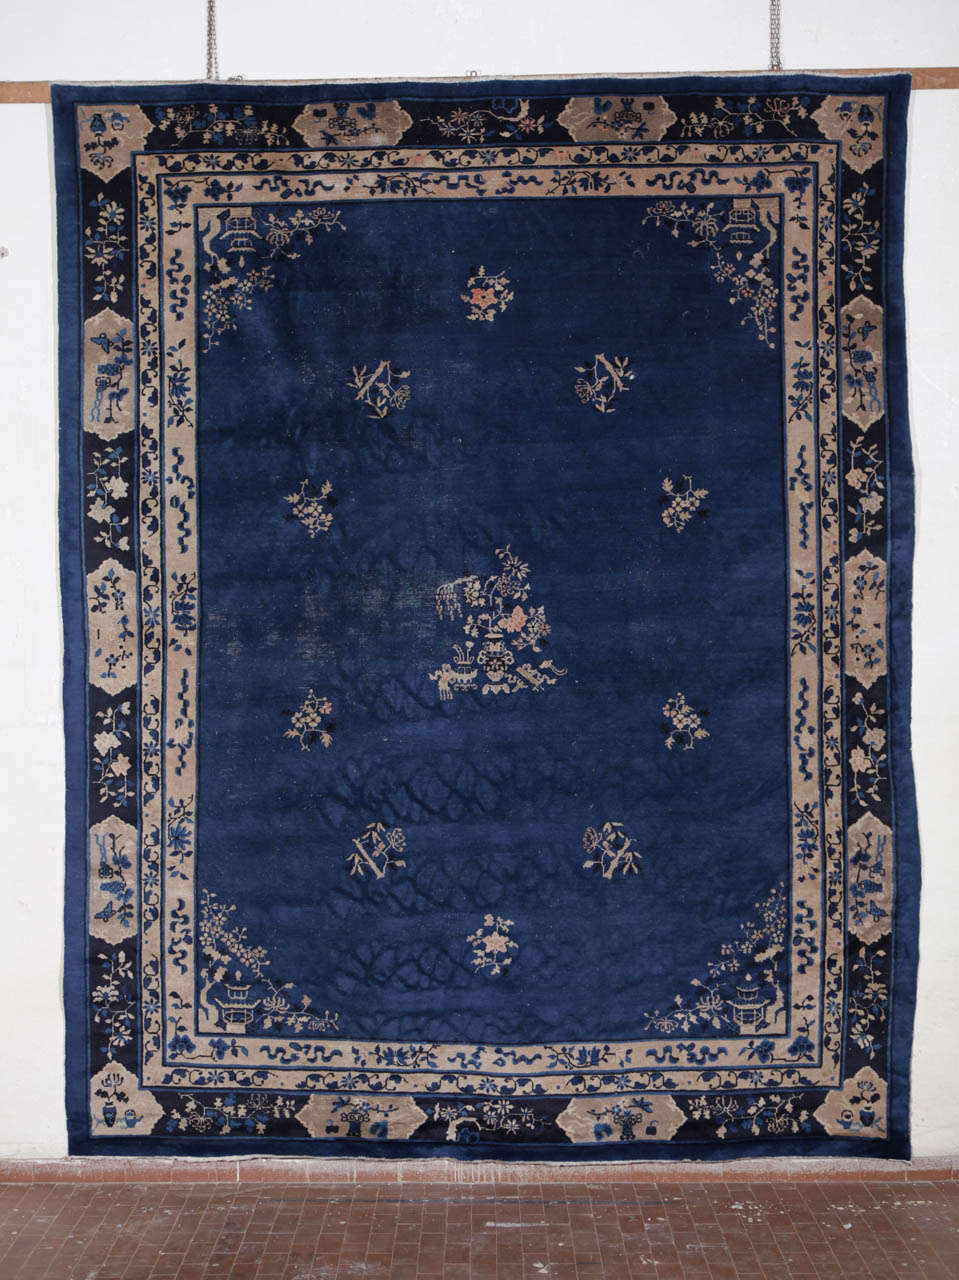 A fine early 20th century Indigo blue peking rug.
Measures: cm 350 x 280.